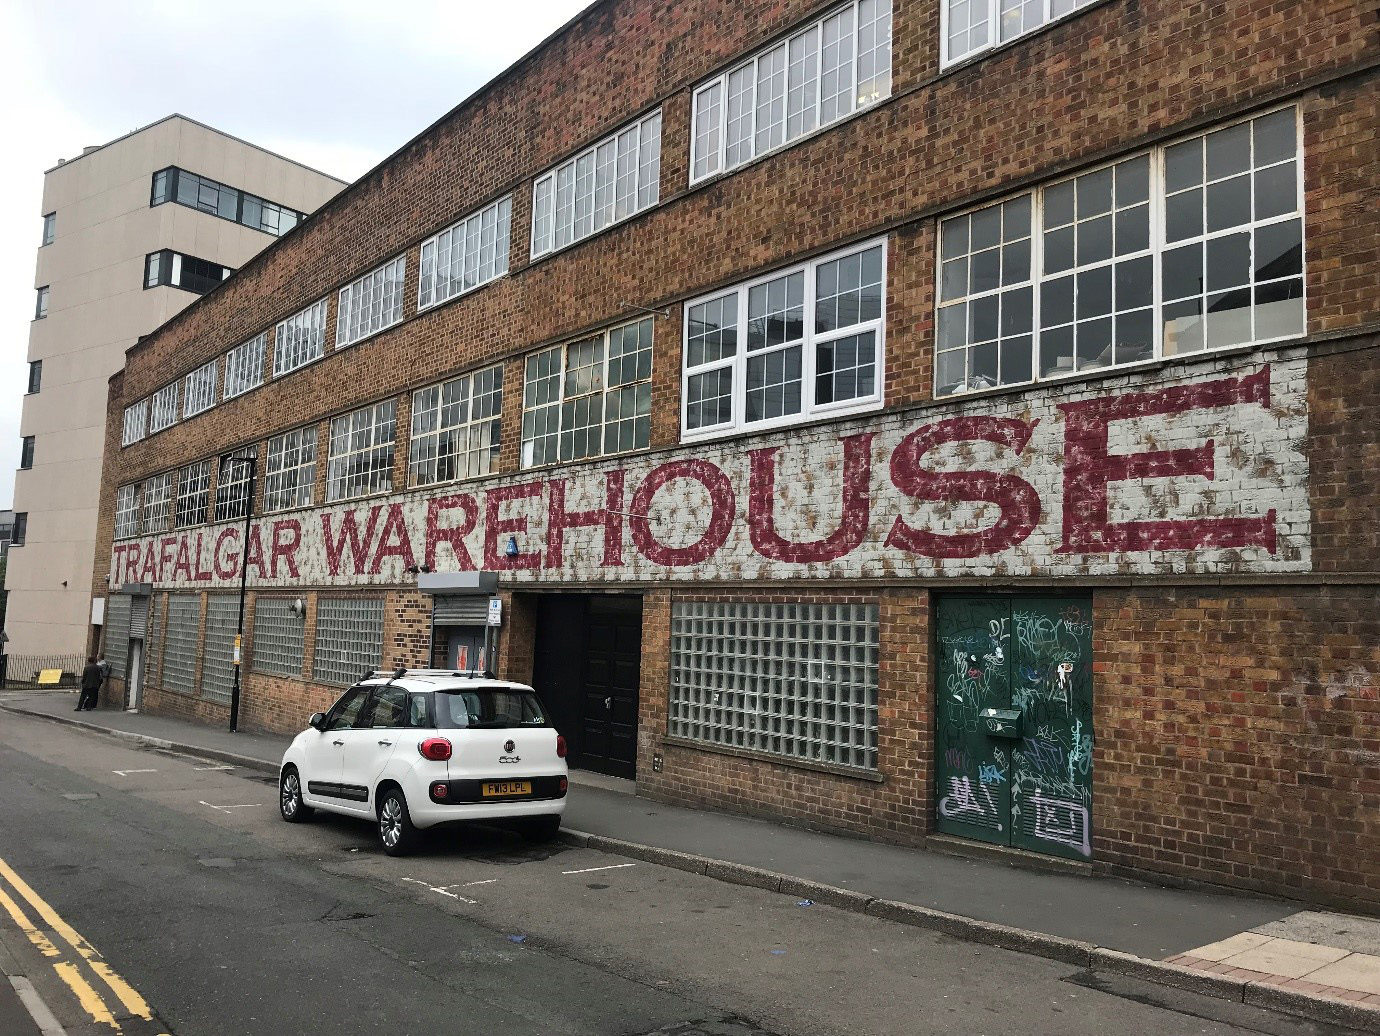 Trafalgar Warehouse in Sheffield